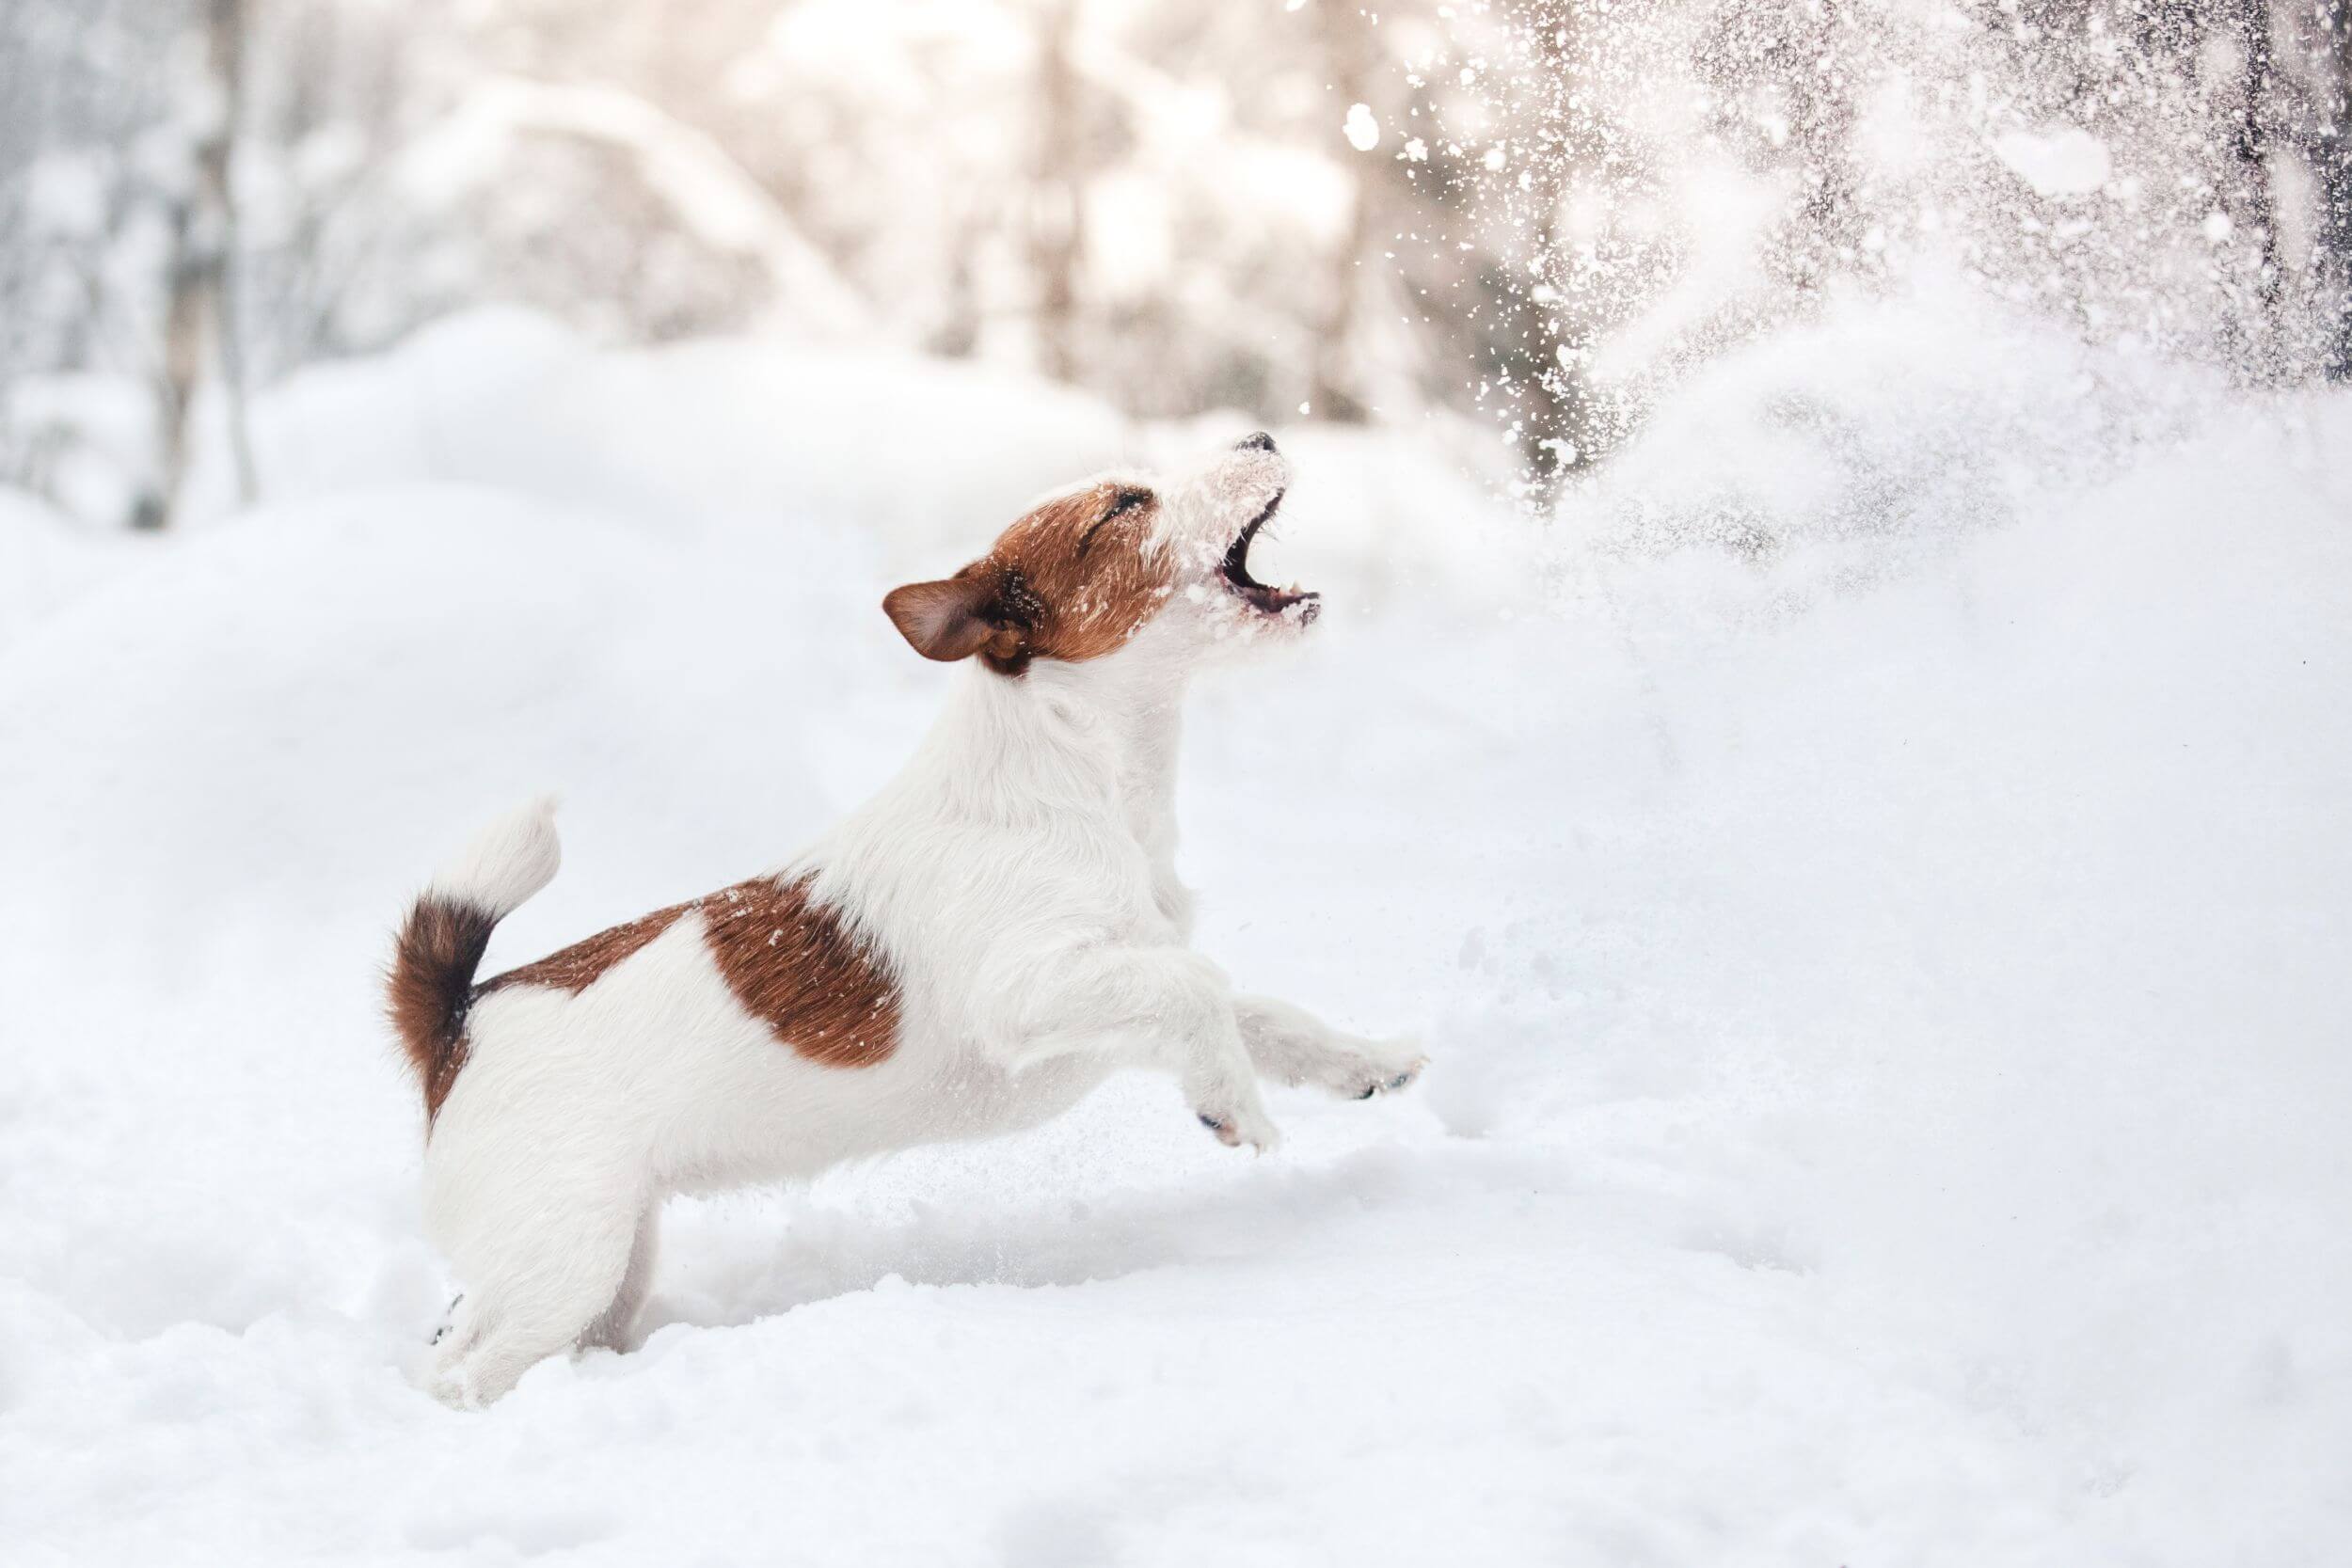 dog playing in the snow (c) istock   Anna av